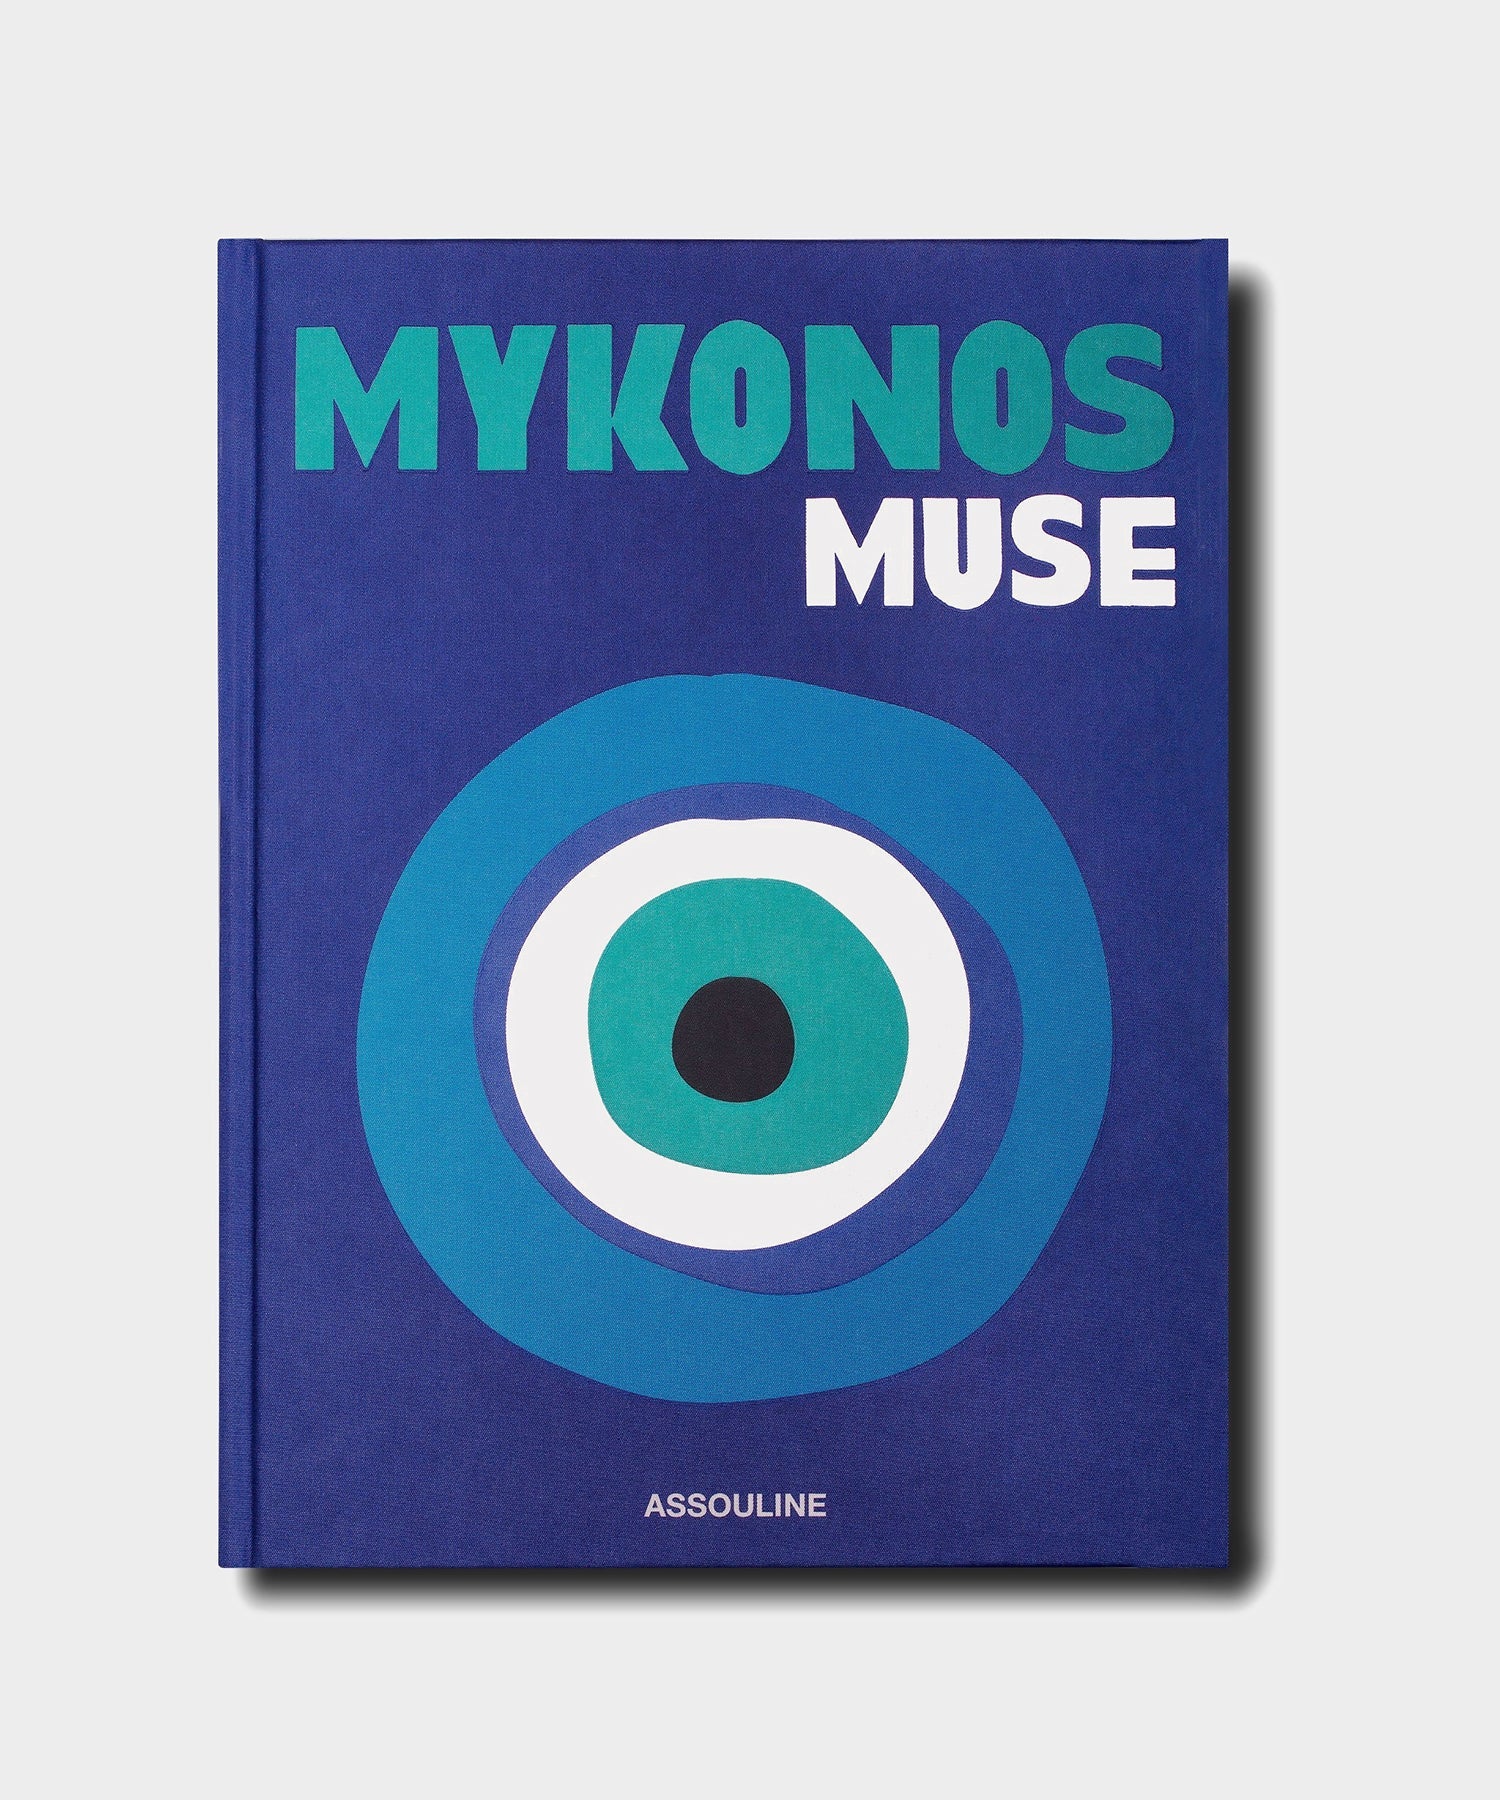 Assouline "Mykonos Muse" Book